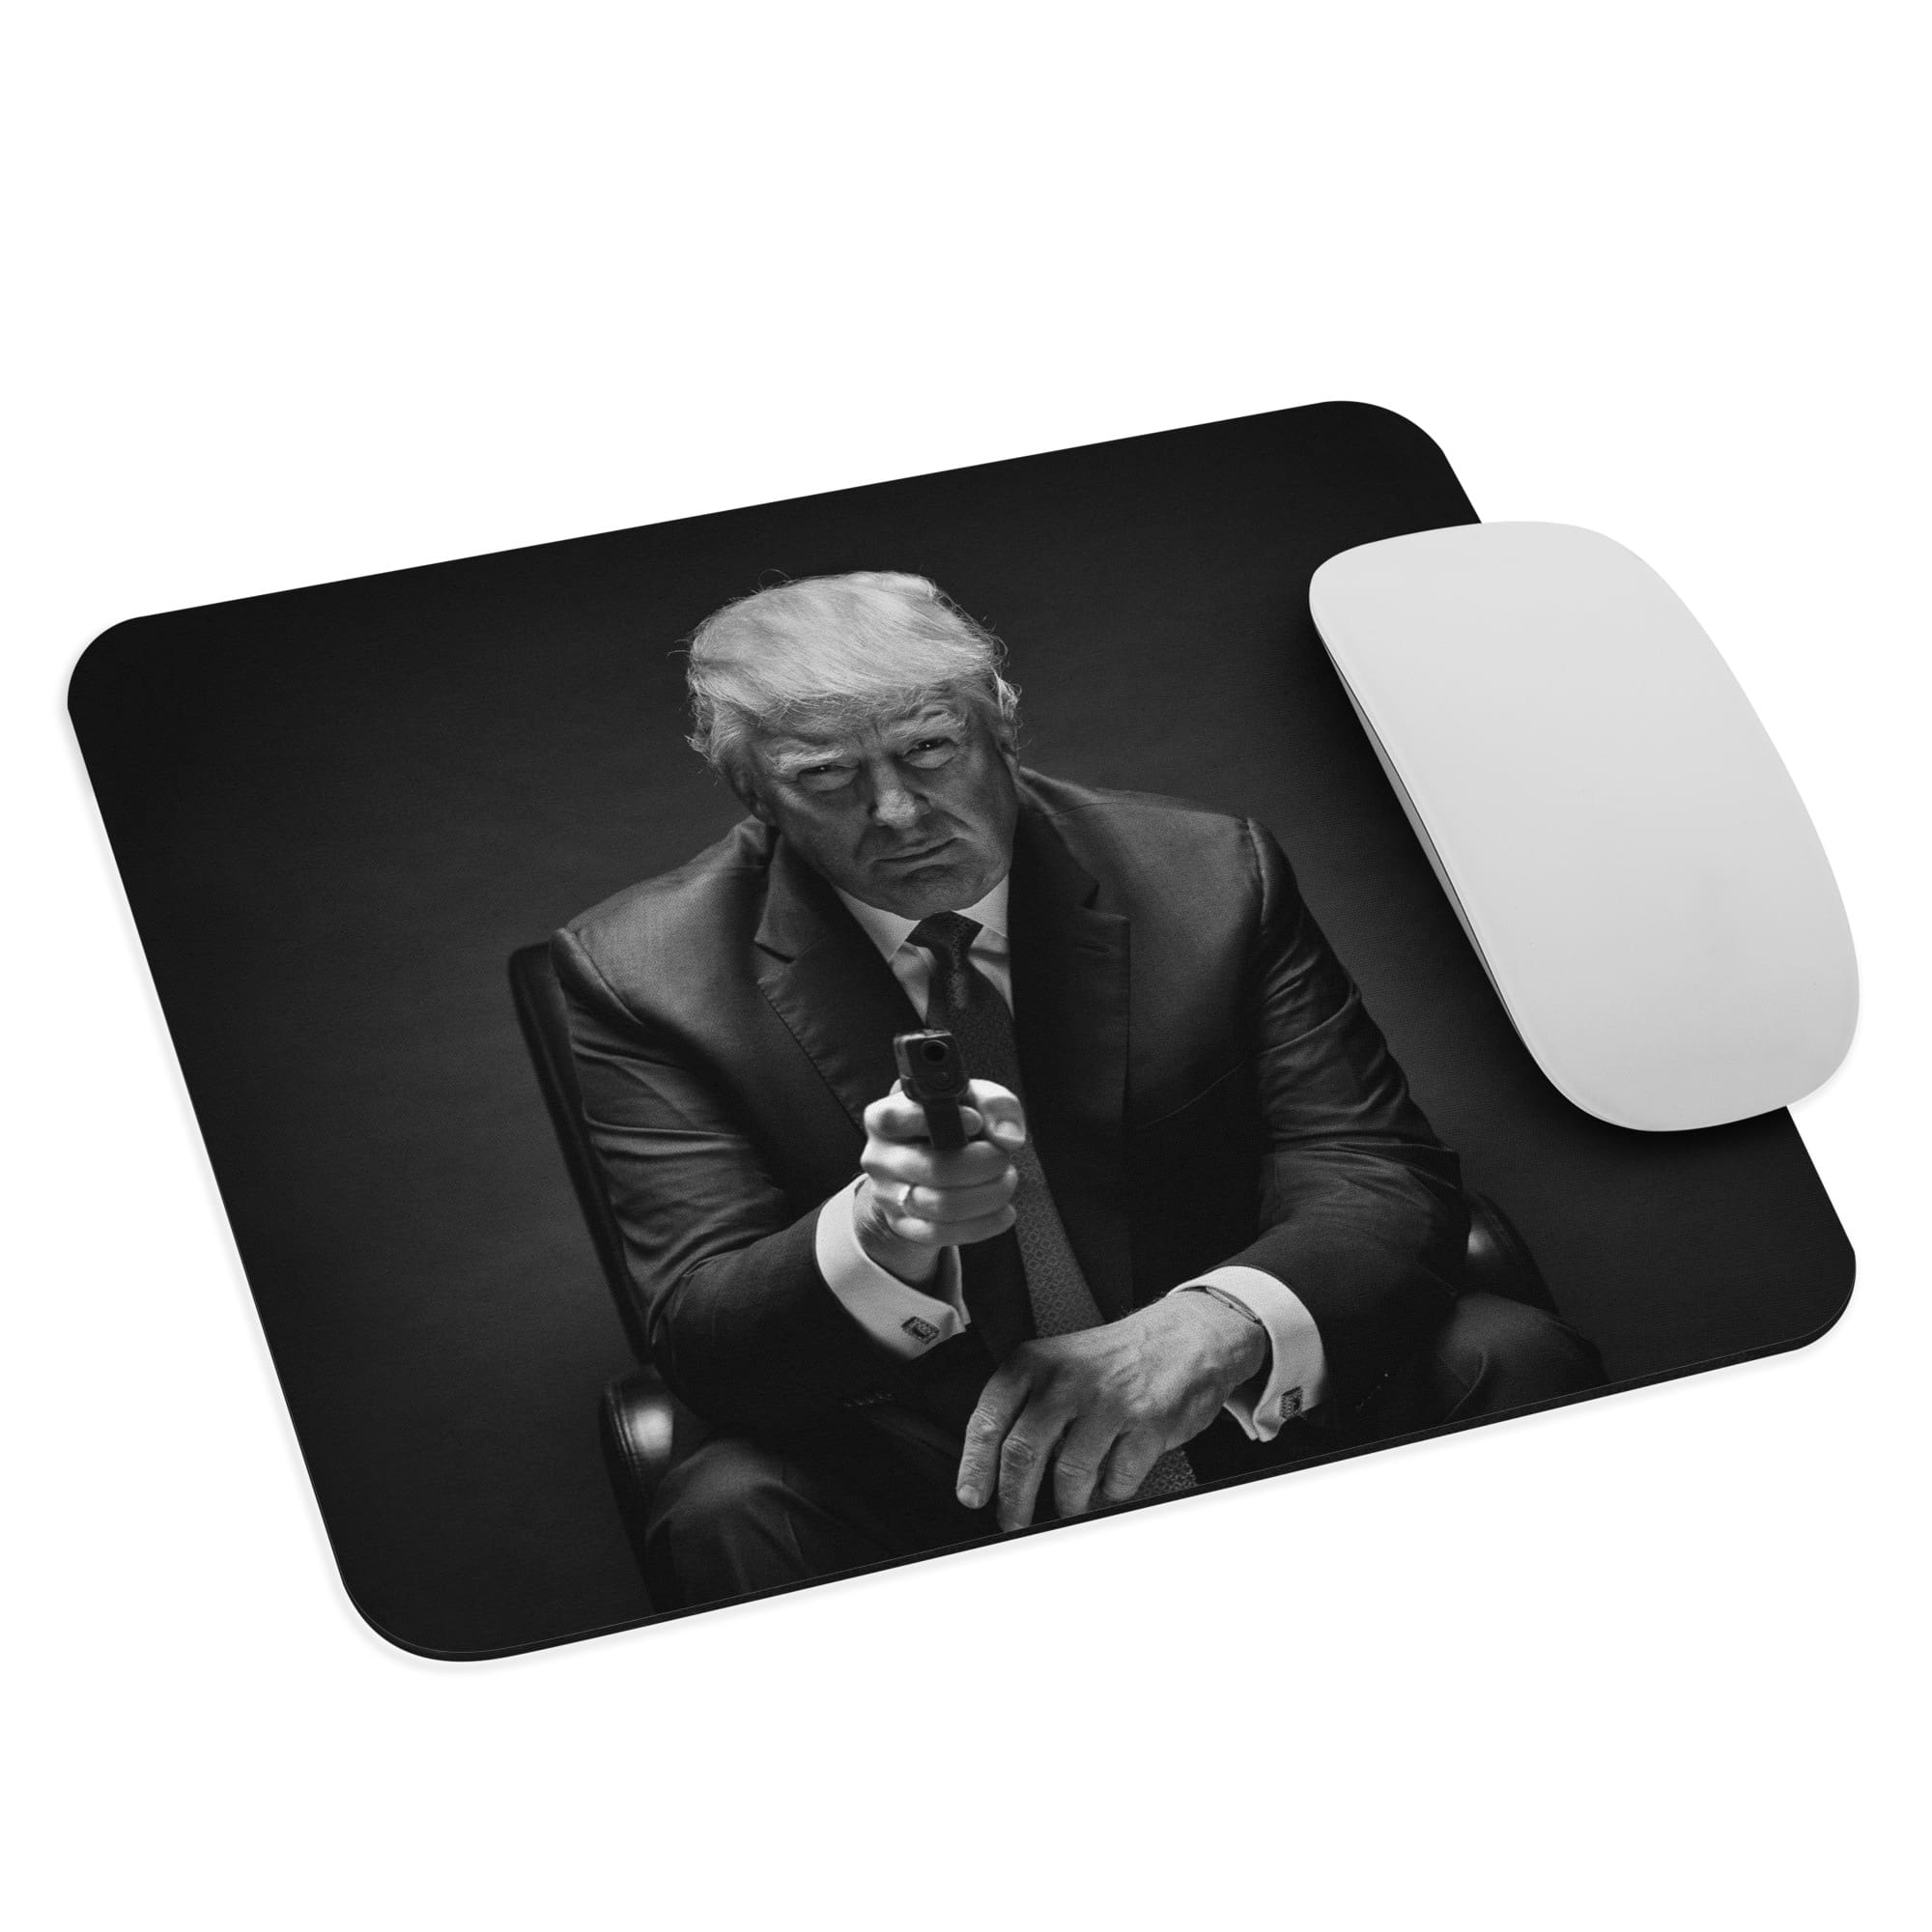 Trump Has a Gun Mouse pad by Trump is Punk Rock